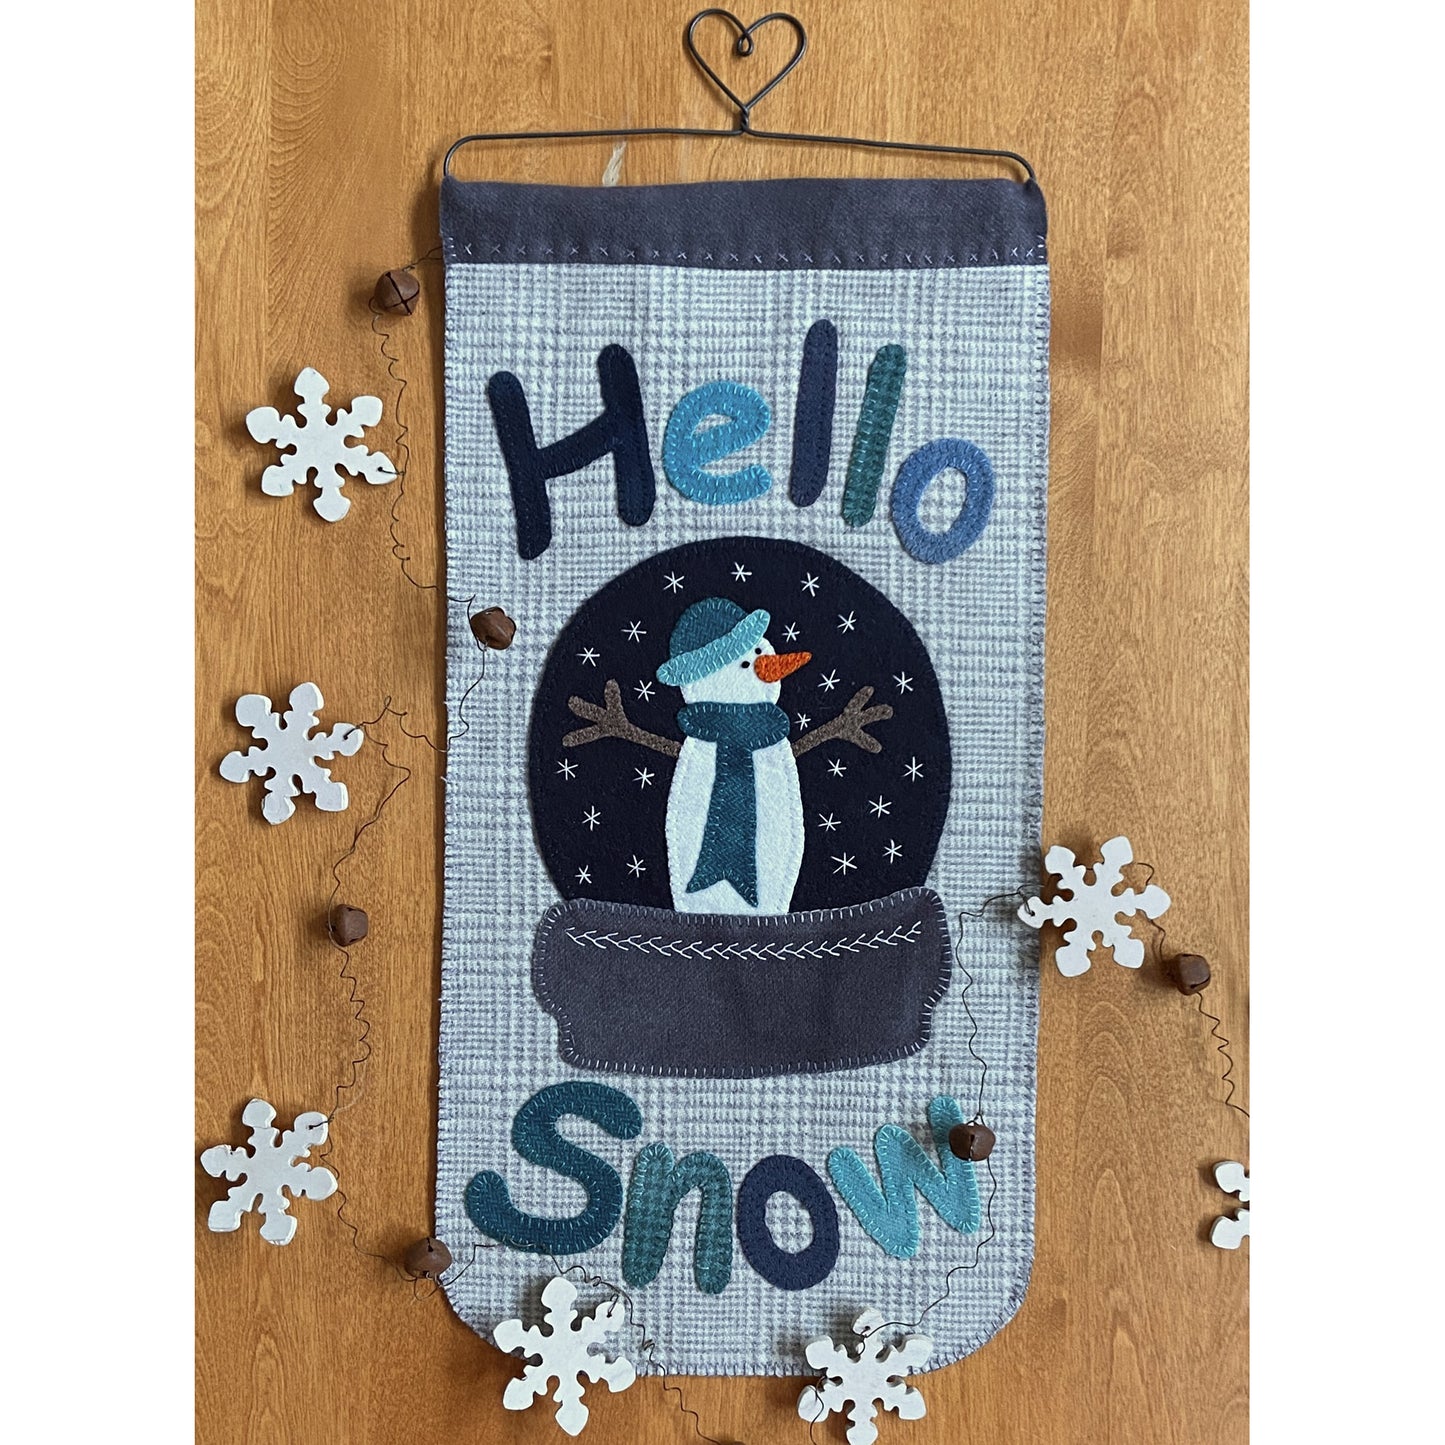 Festive snowman in a snow globe banner includes "Hello Snow" message.